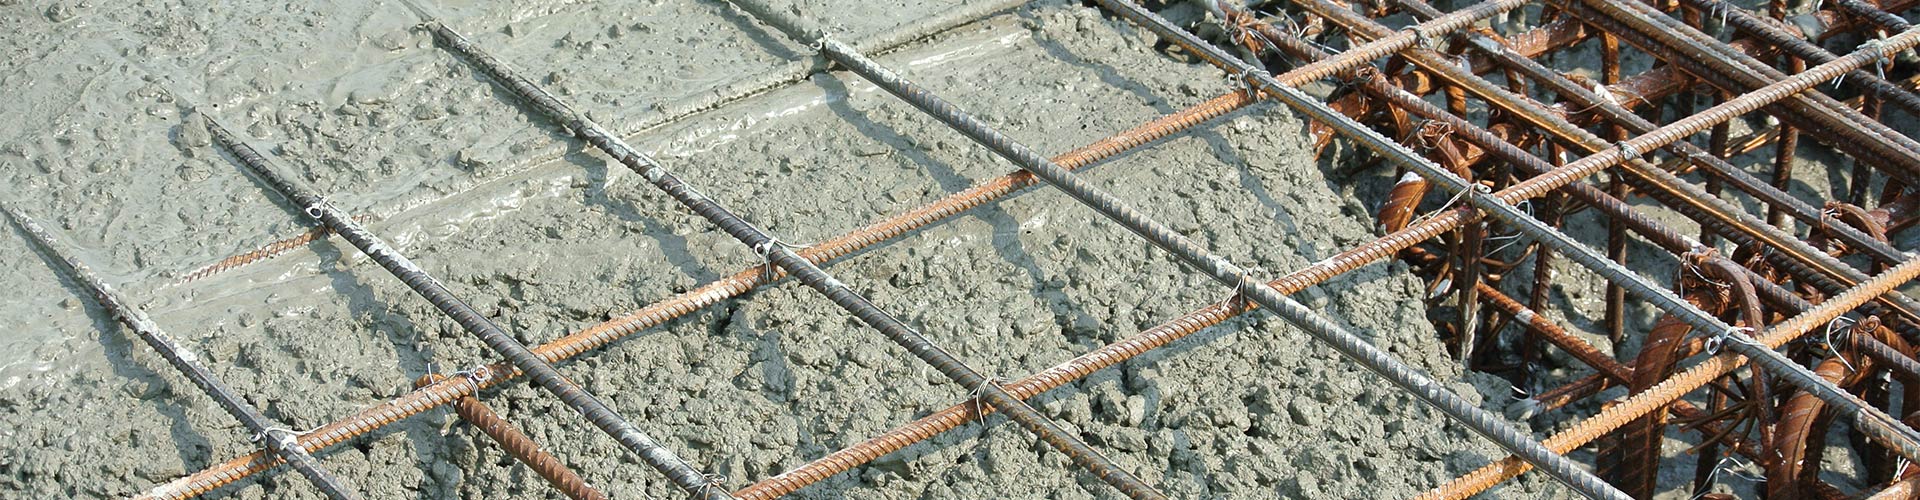 Cement, Sand & Mortar Supplies, Hatch Building Supply